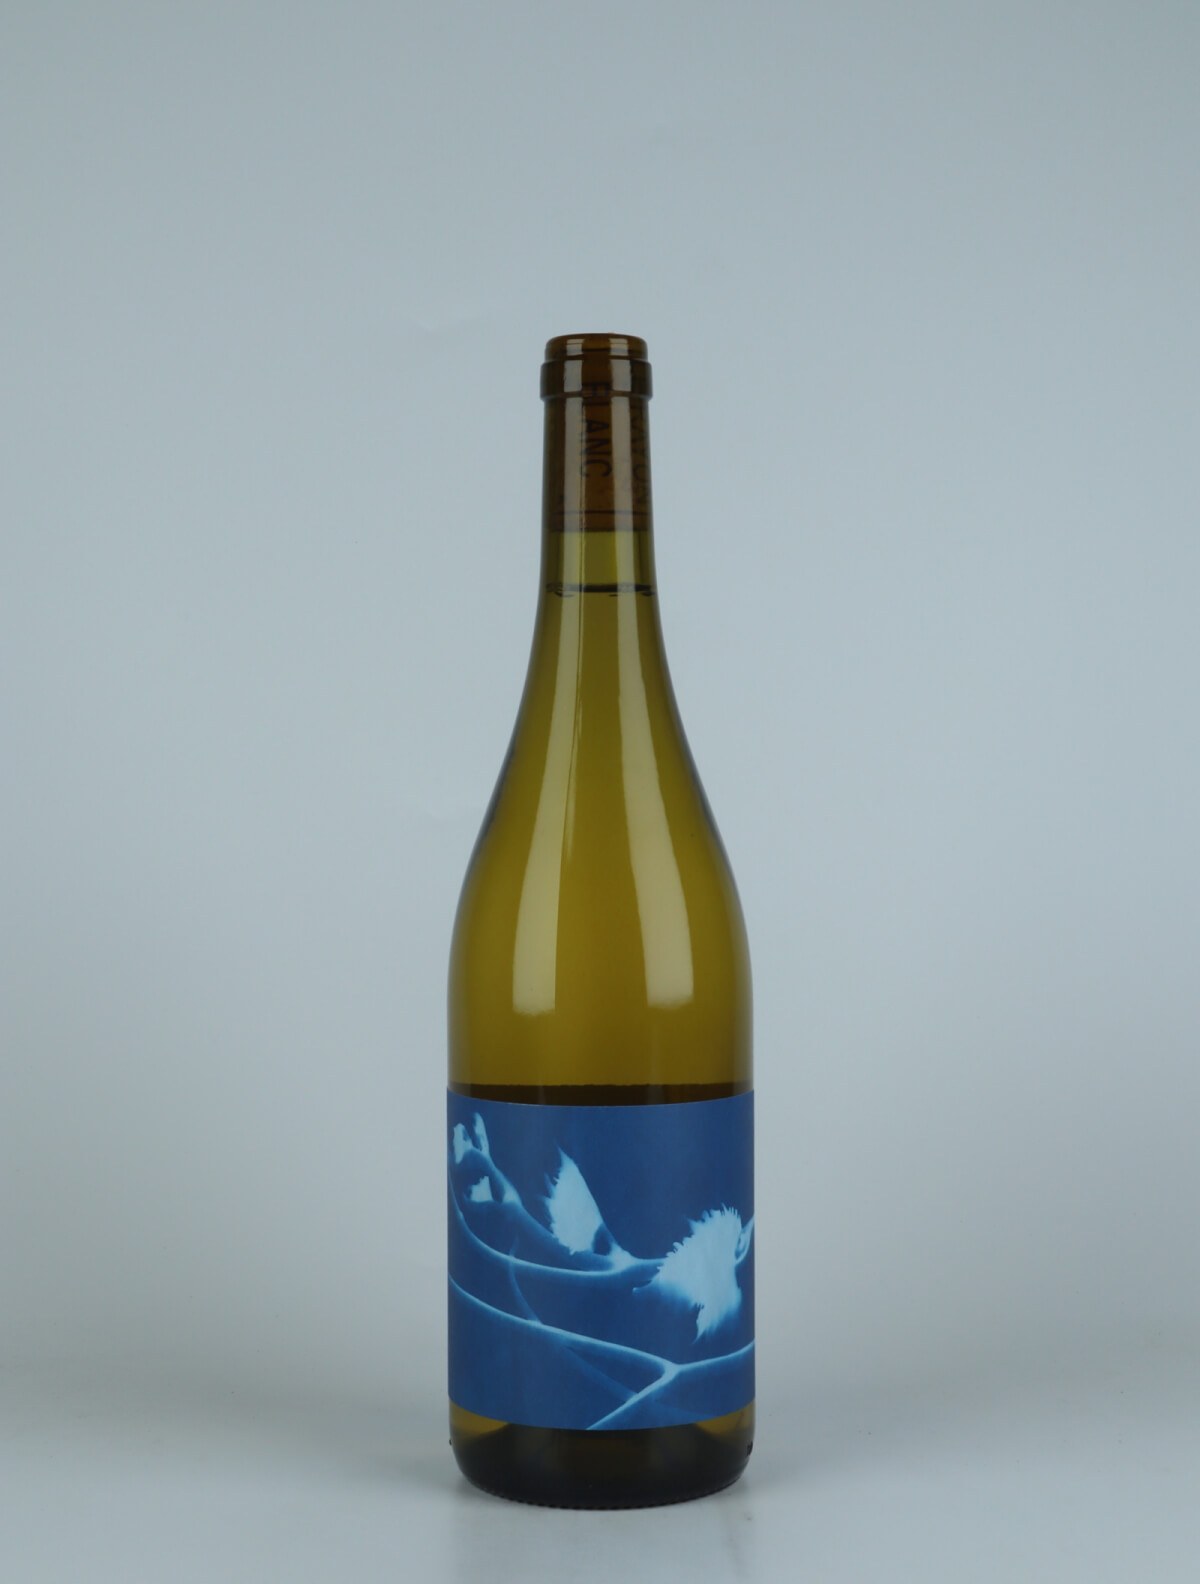 A bottle 2021 Le Rayon Blanc White wine from Thomas Puéchavy, Loire in France